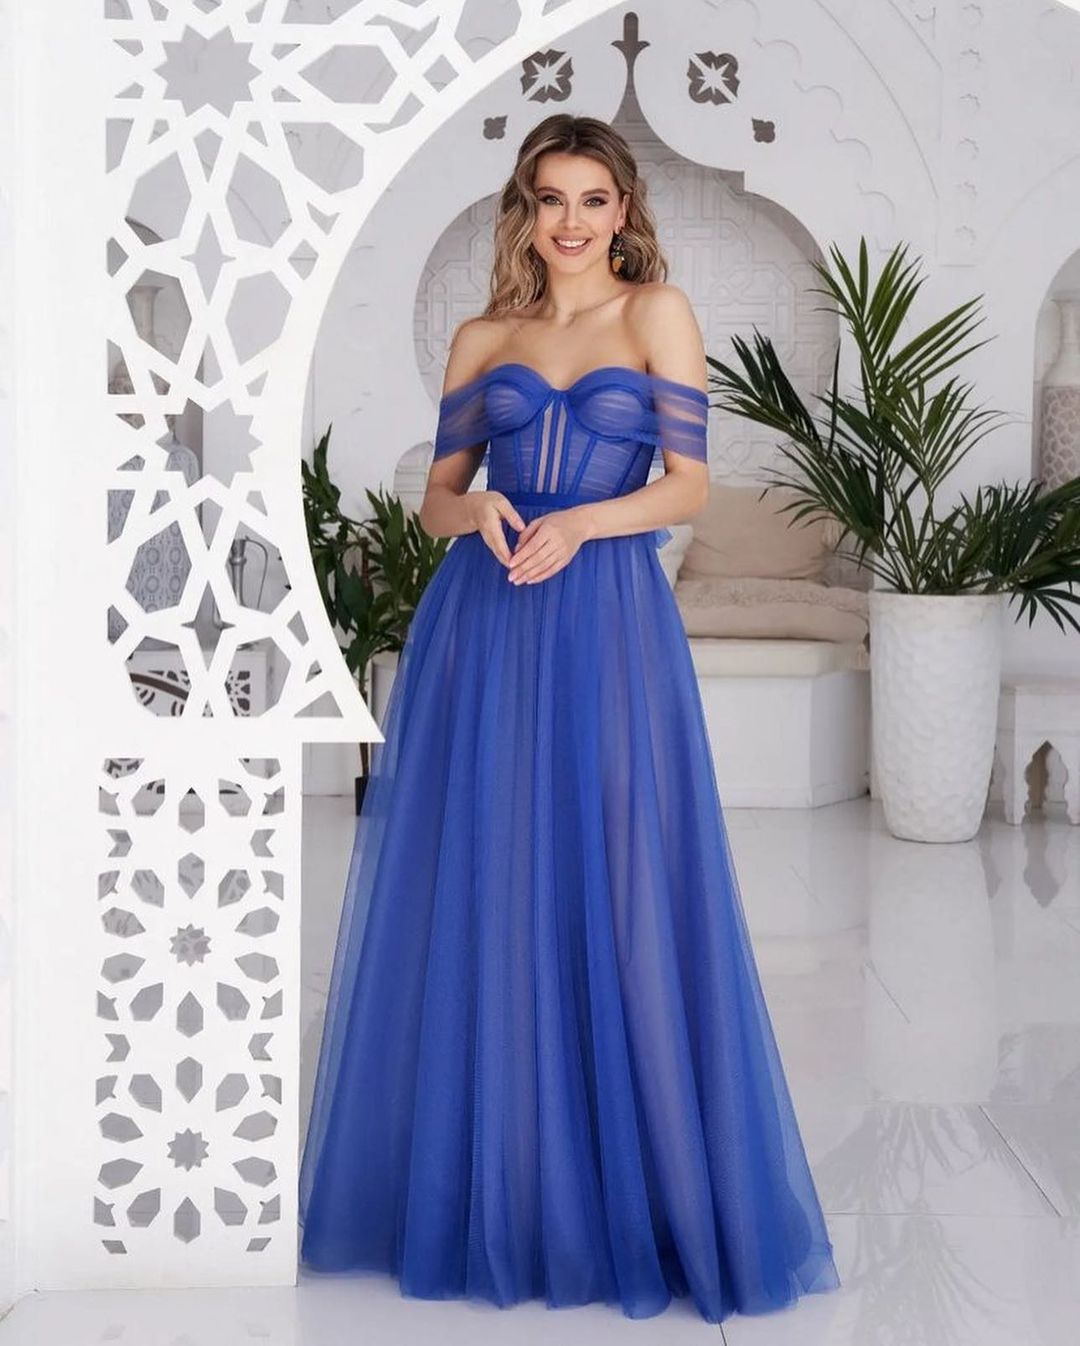 Oknass Tulle Off-the-shoulder Sweetheart Royal Blue Prom Dress